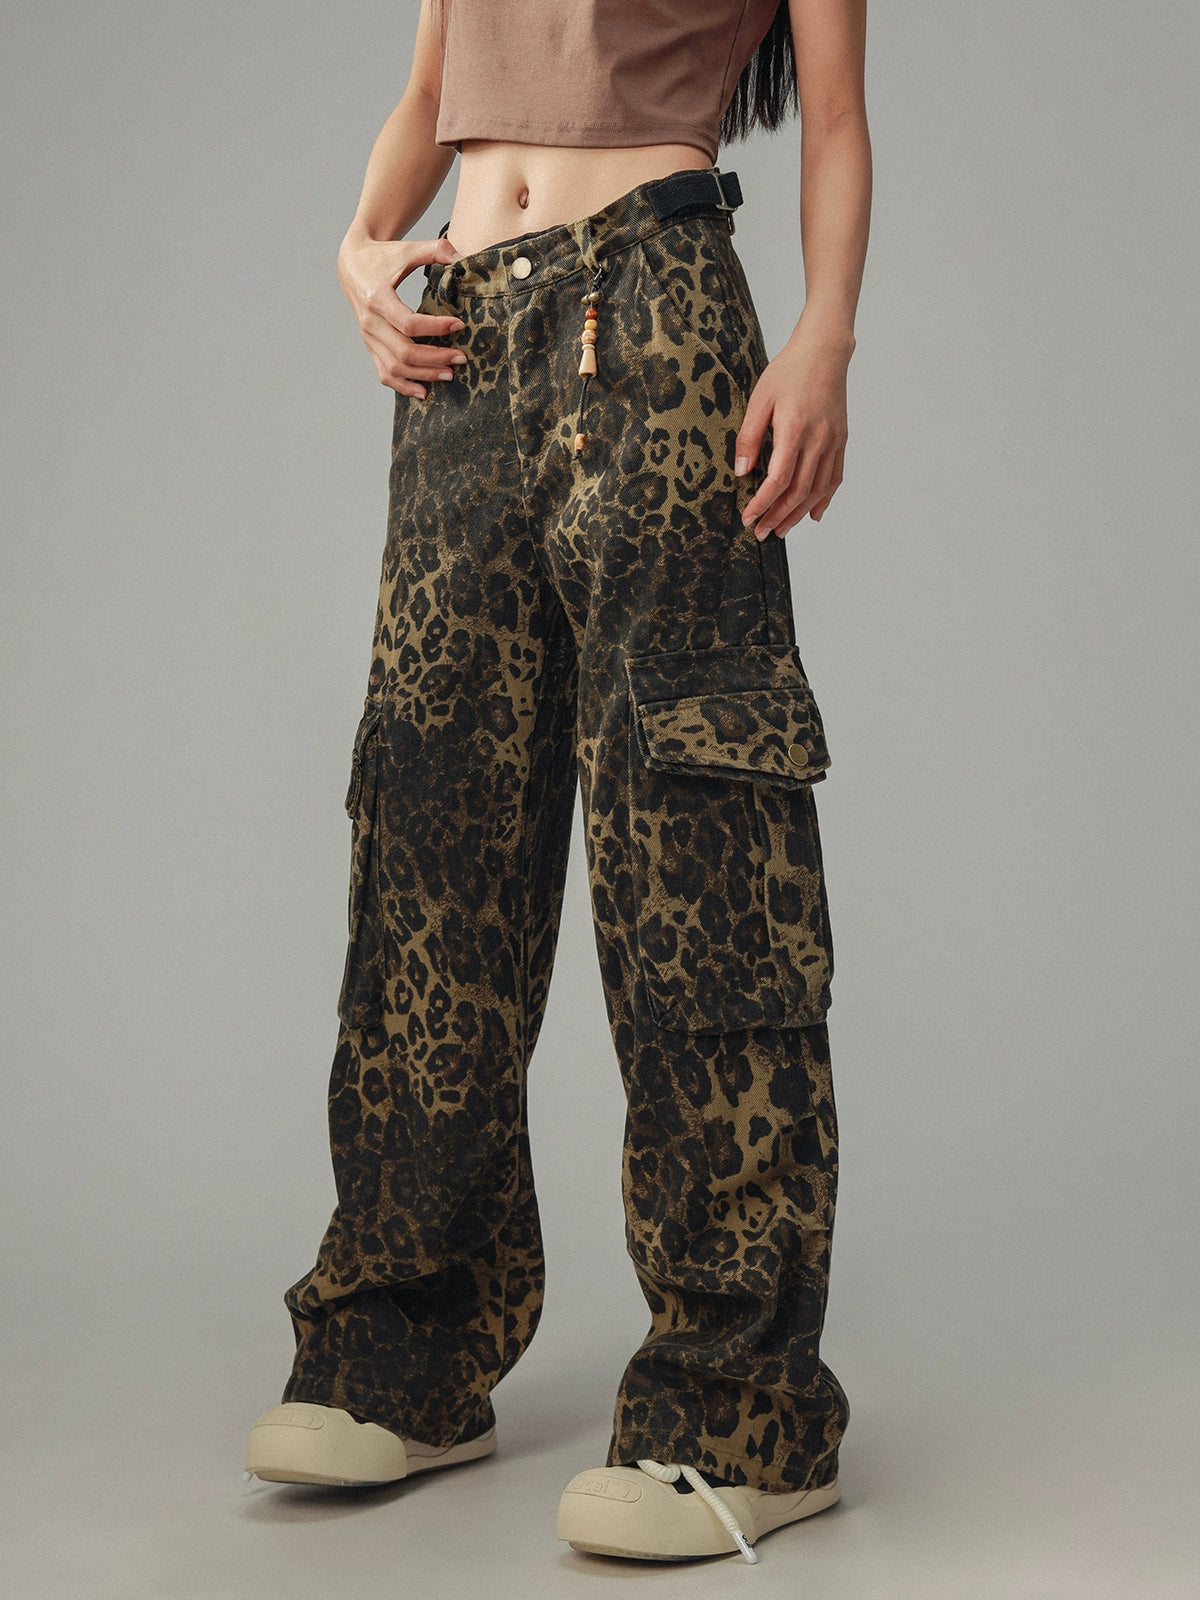 American Retro Leopard Print Pocket Pants